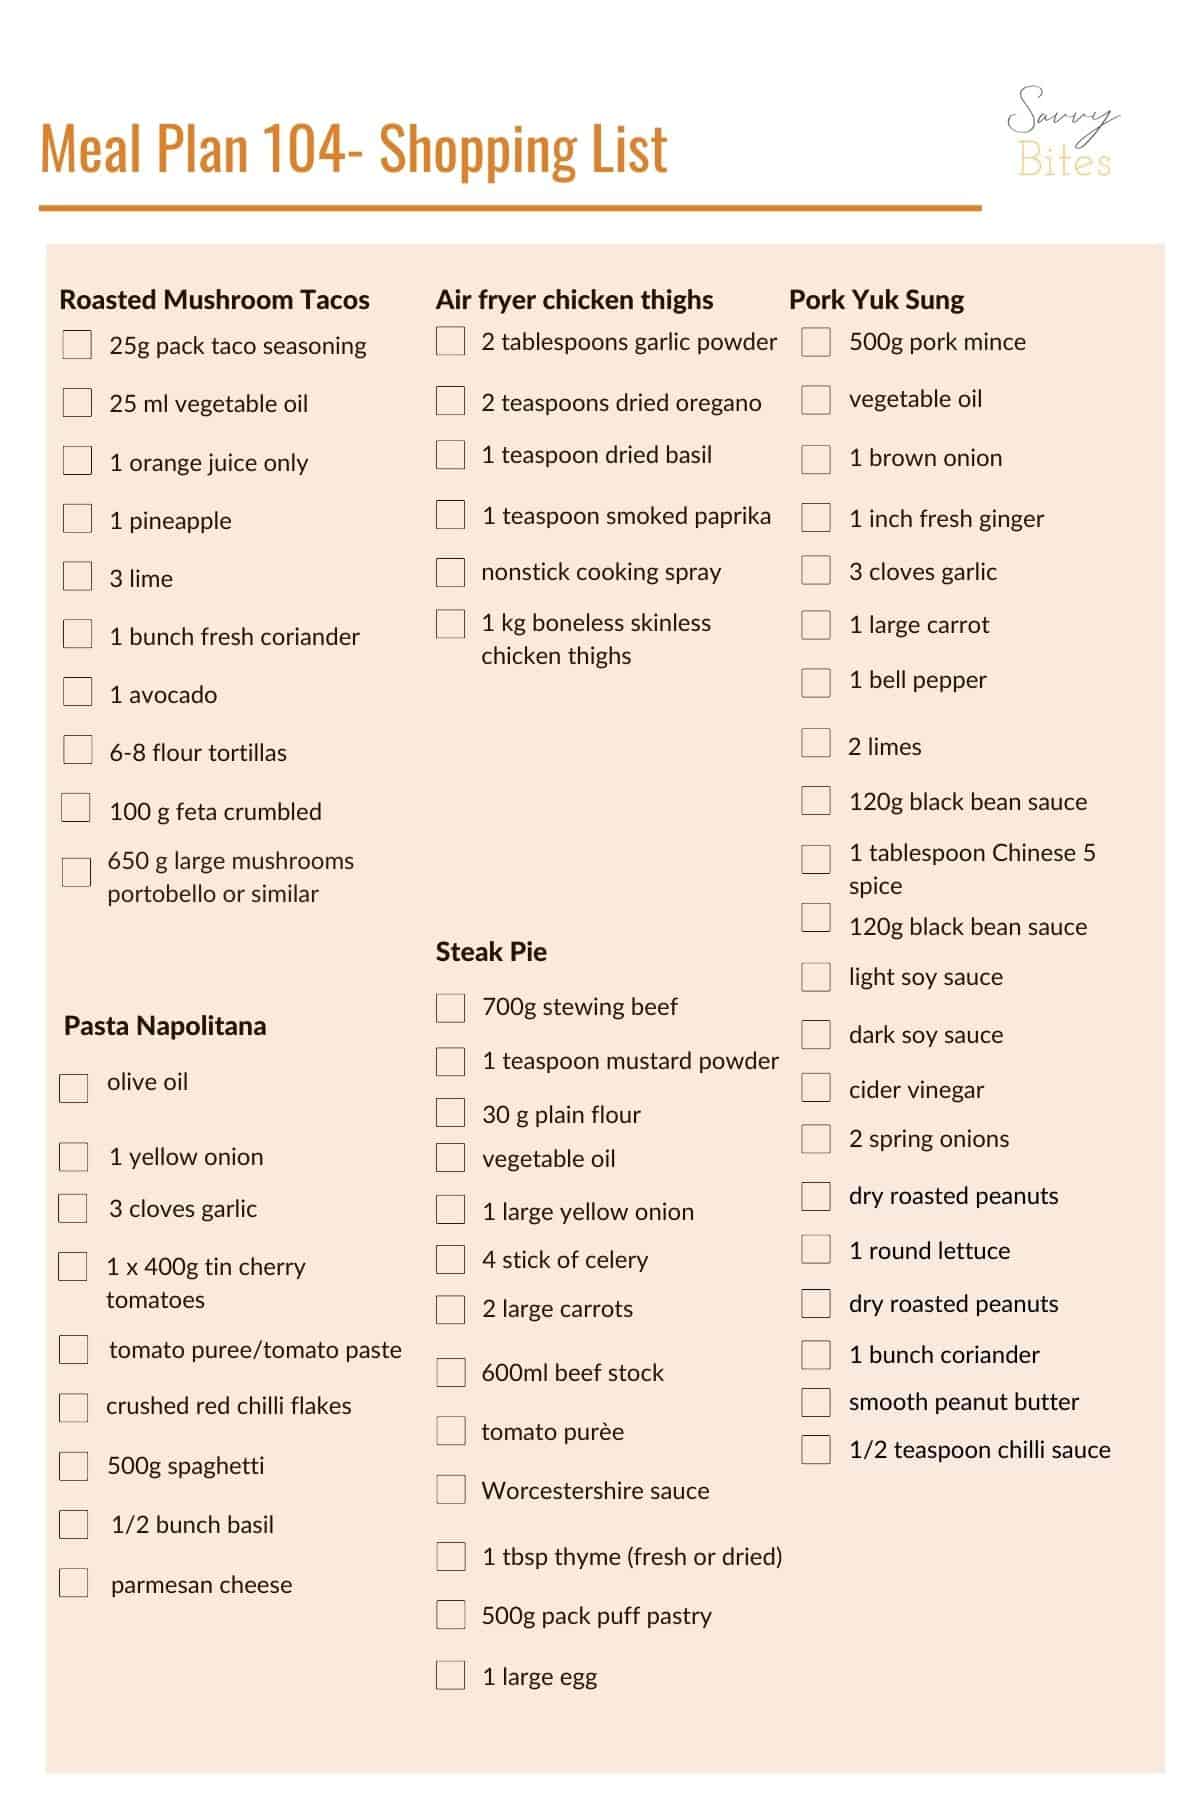 Budget meal plan shopping list.